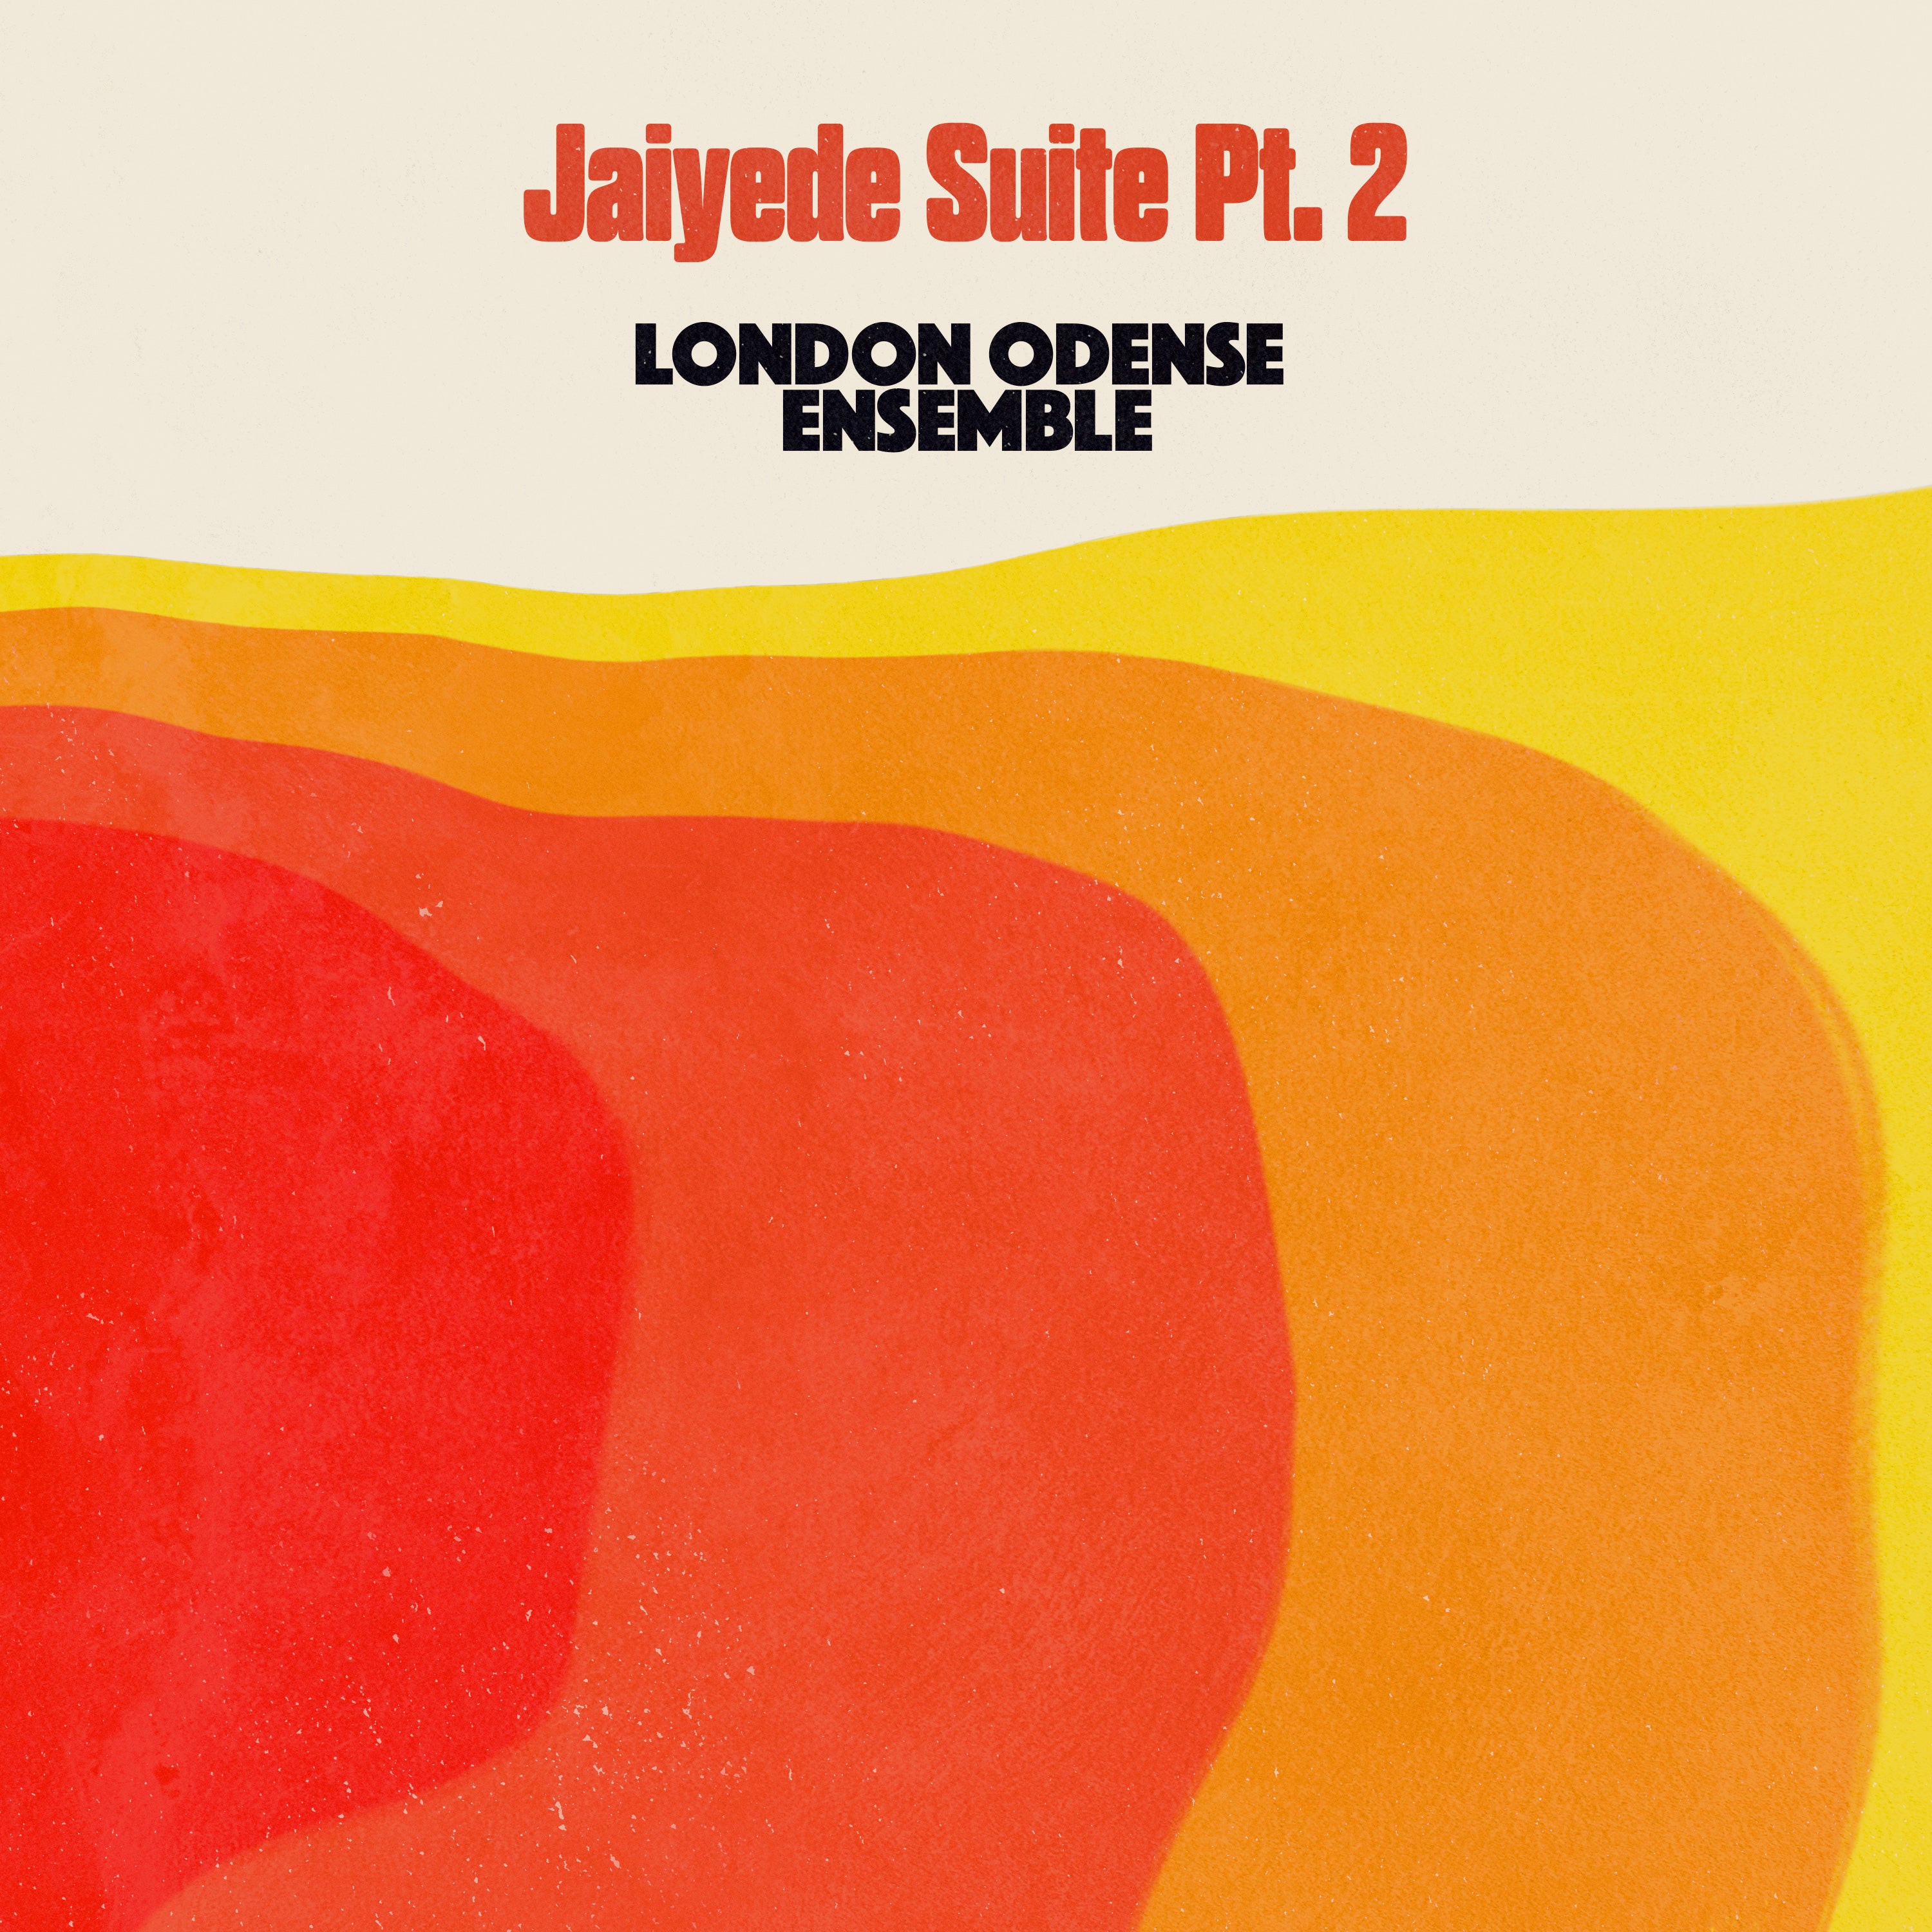 London Odense Ensemble - Jaiyede Suite, Pt. 2 (Single Version)